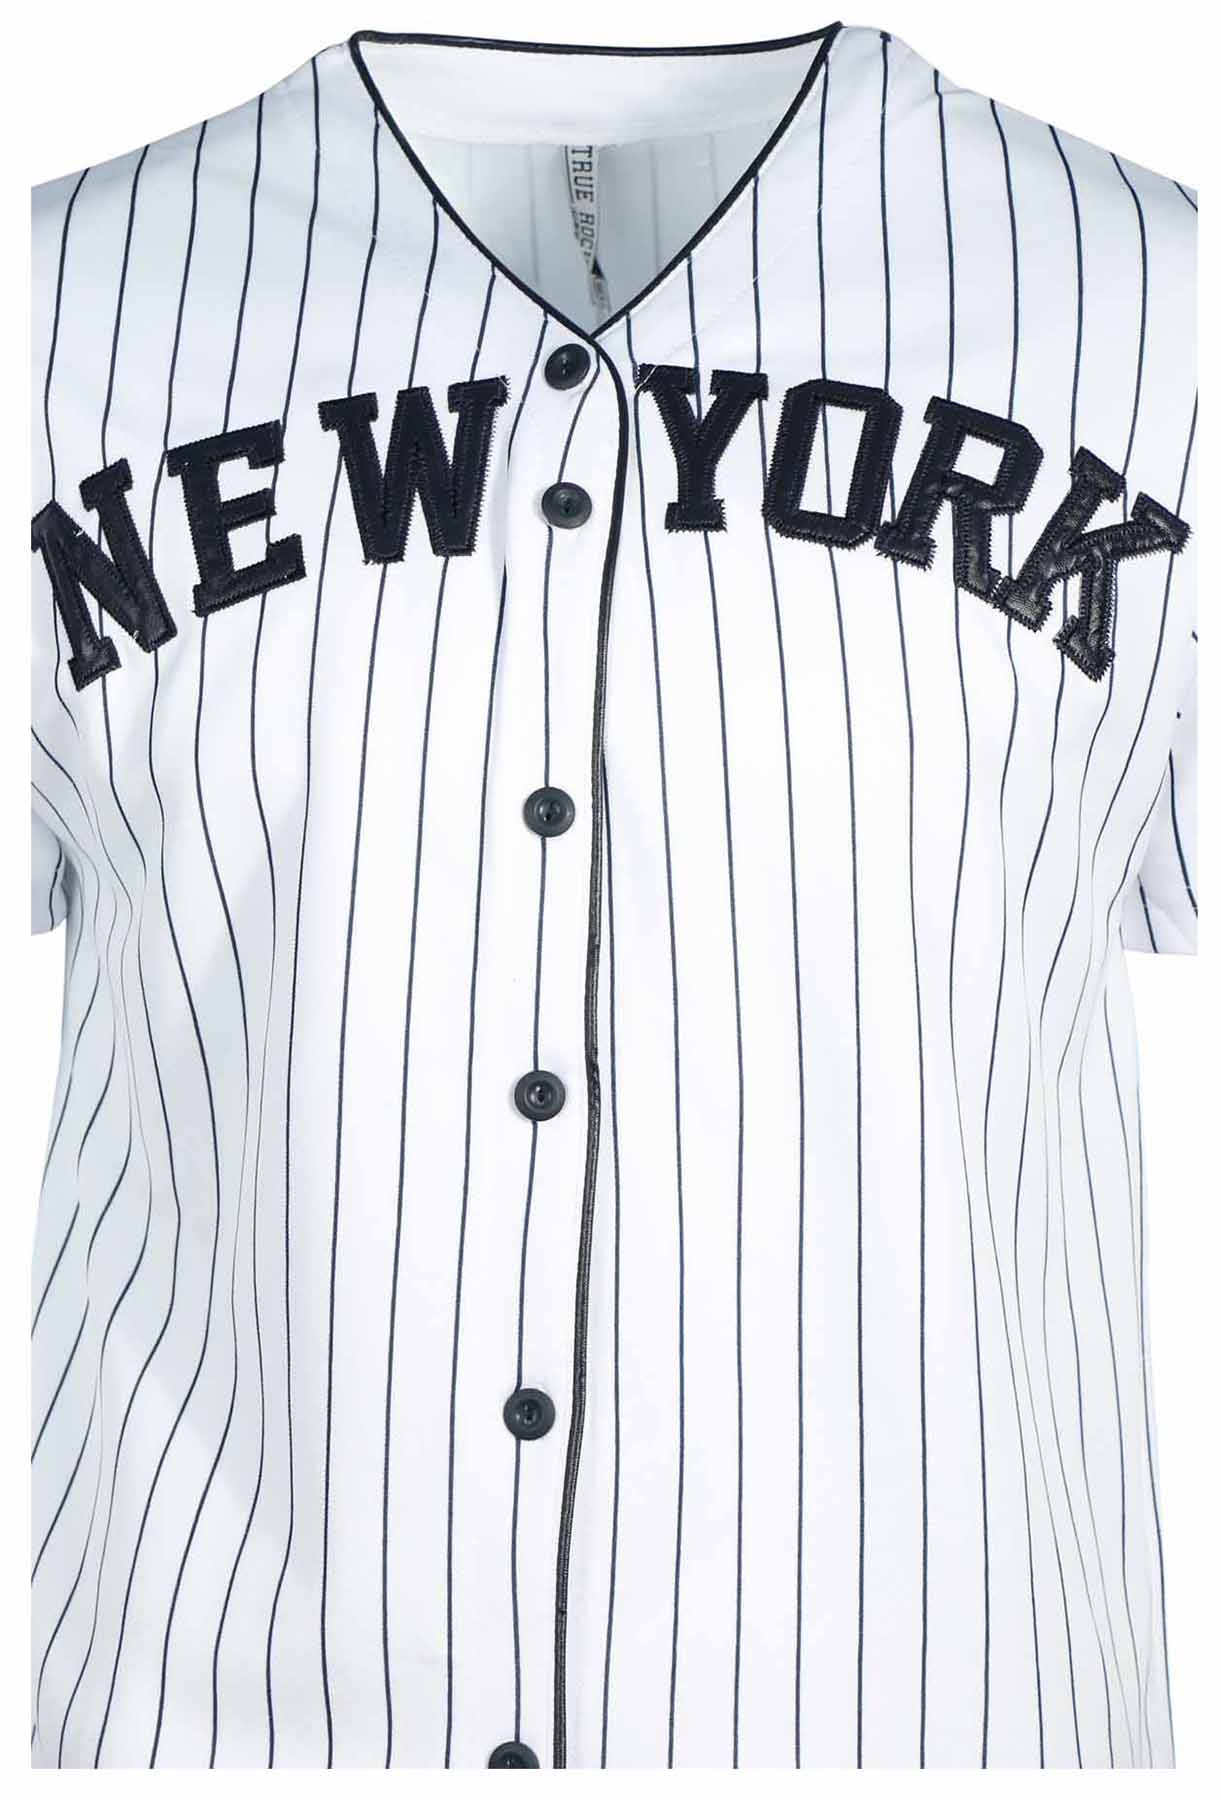 True Rock Men's New York Slim Fit Pinstripe Baseball Jersey